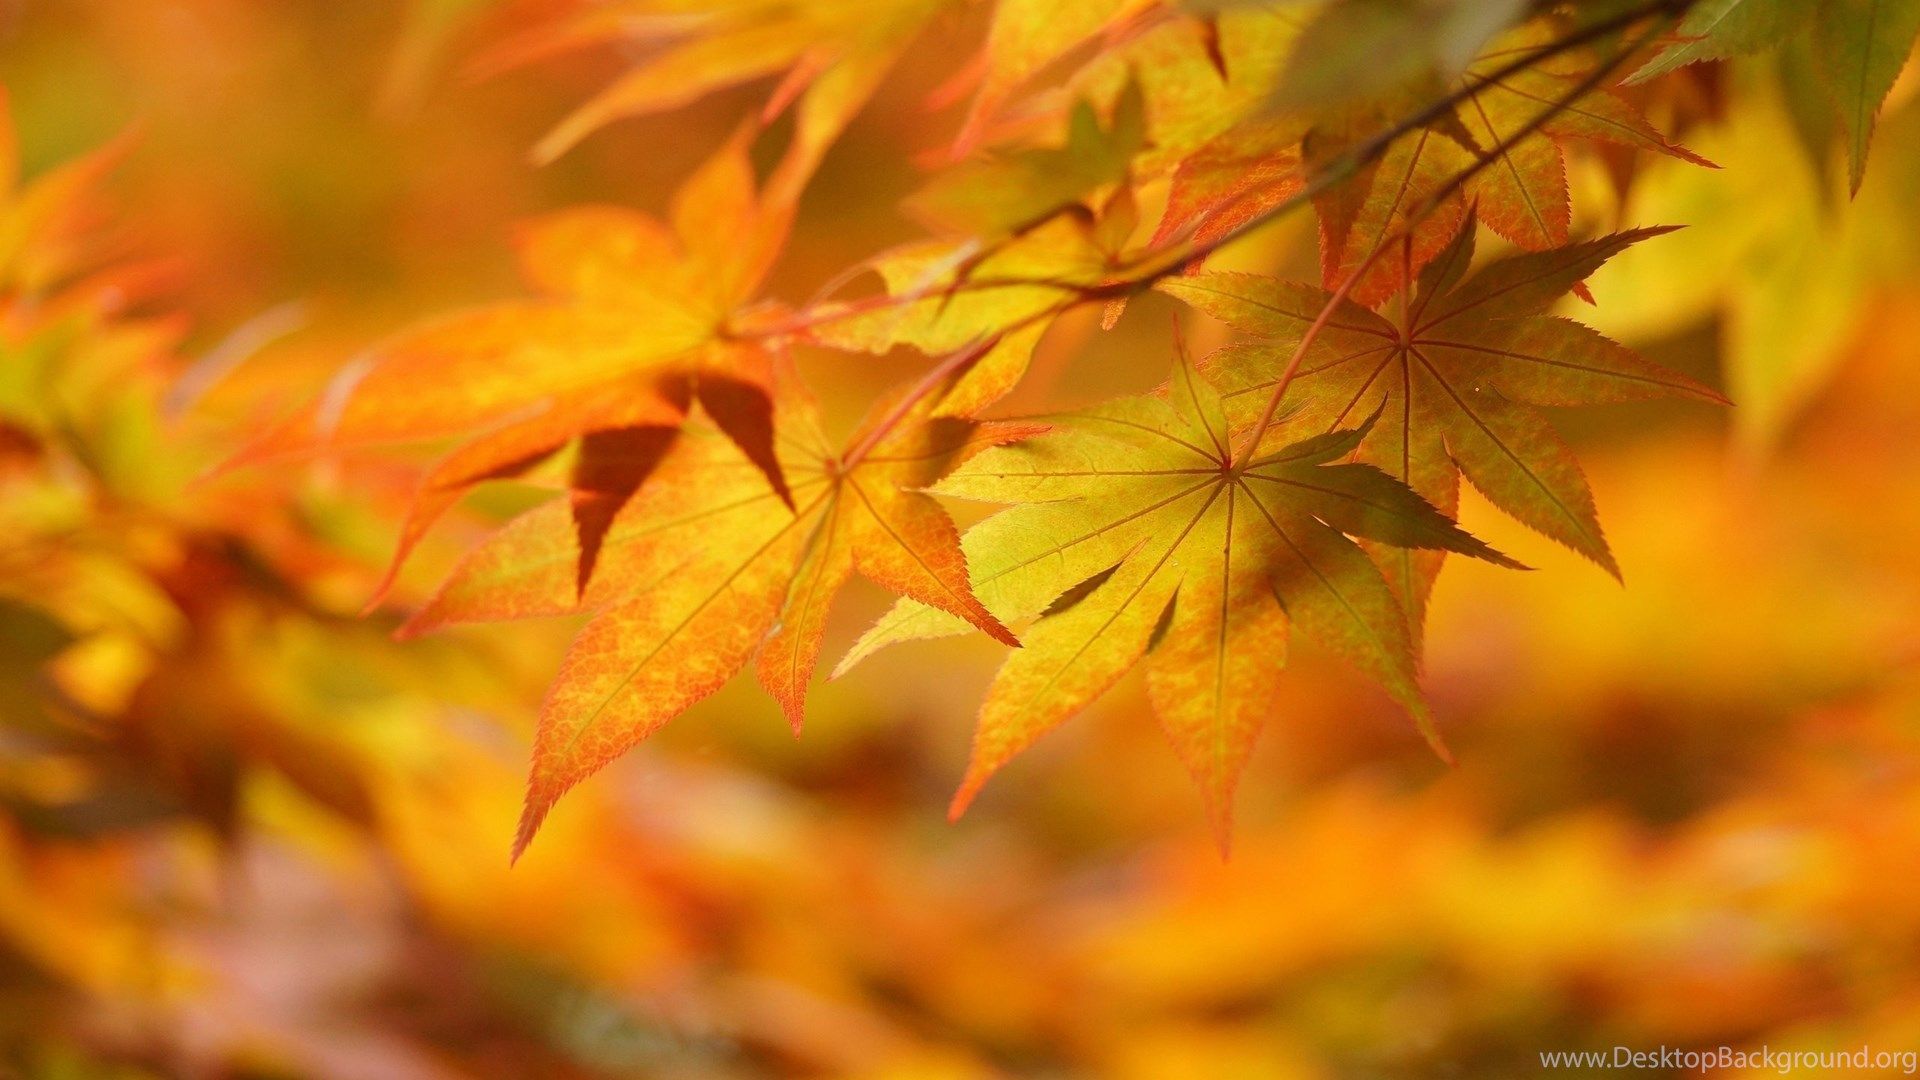 Yellow Autumn Leaves Wallpaper 2560x1600 857988 Desktop Background